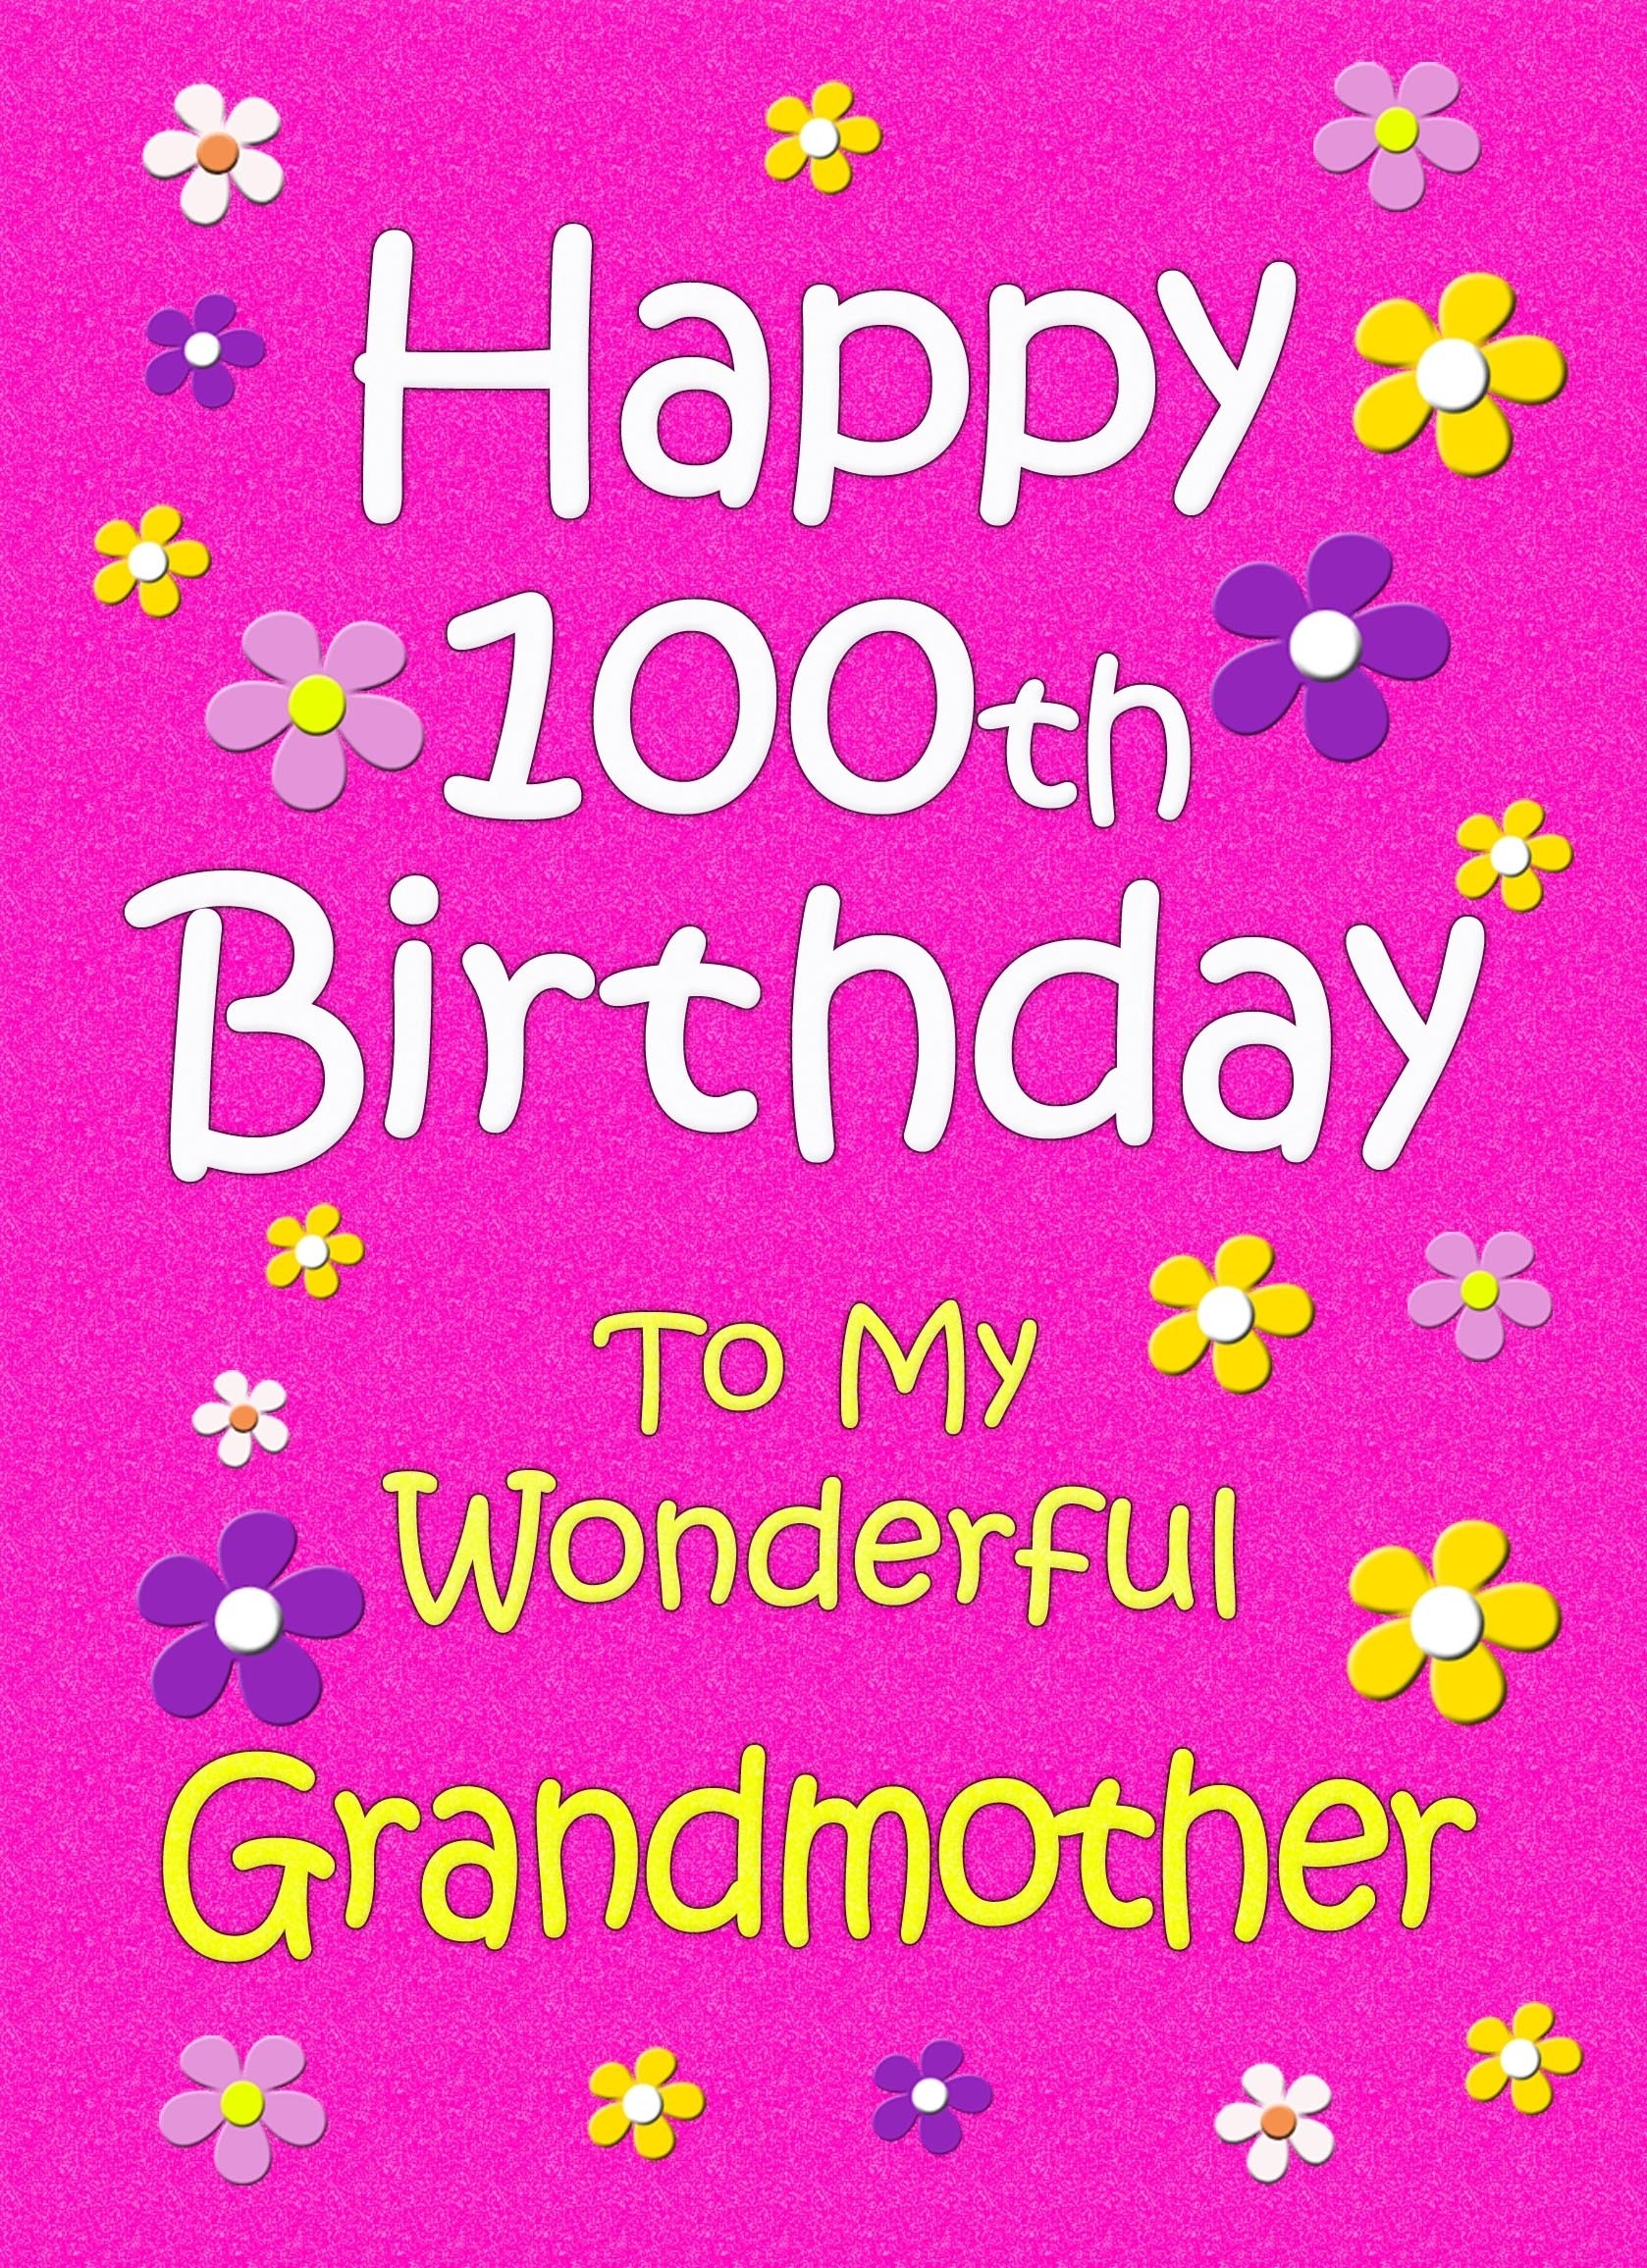 Grandmother 100th Birthday Card (Pink)